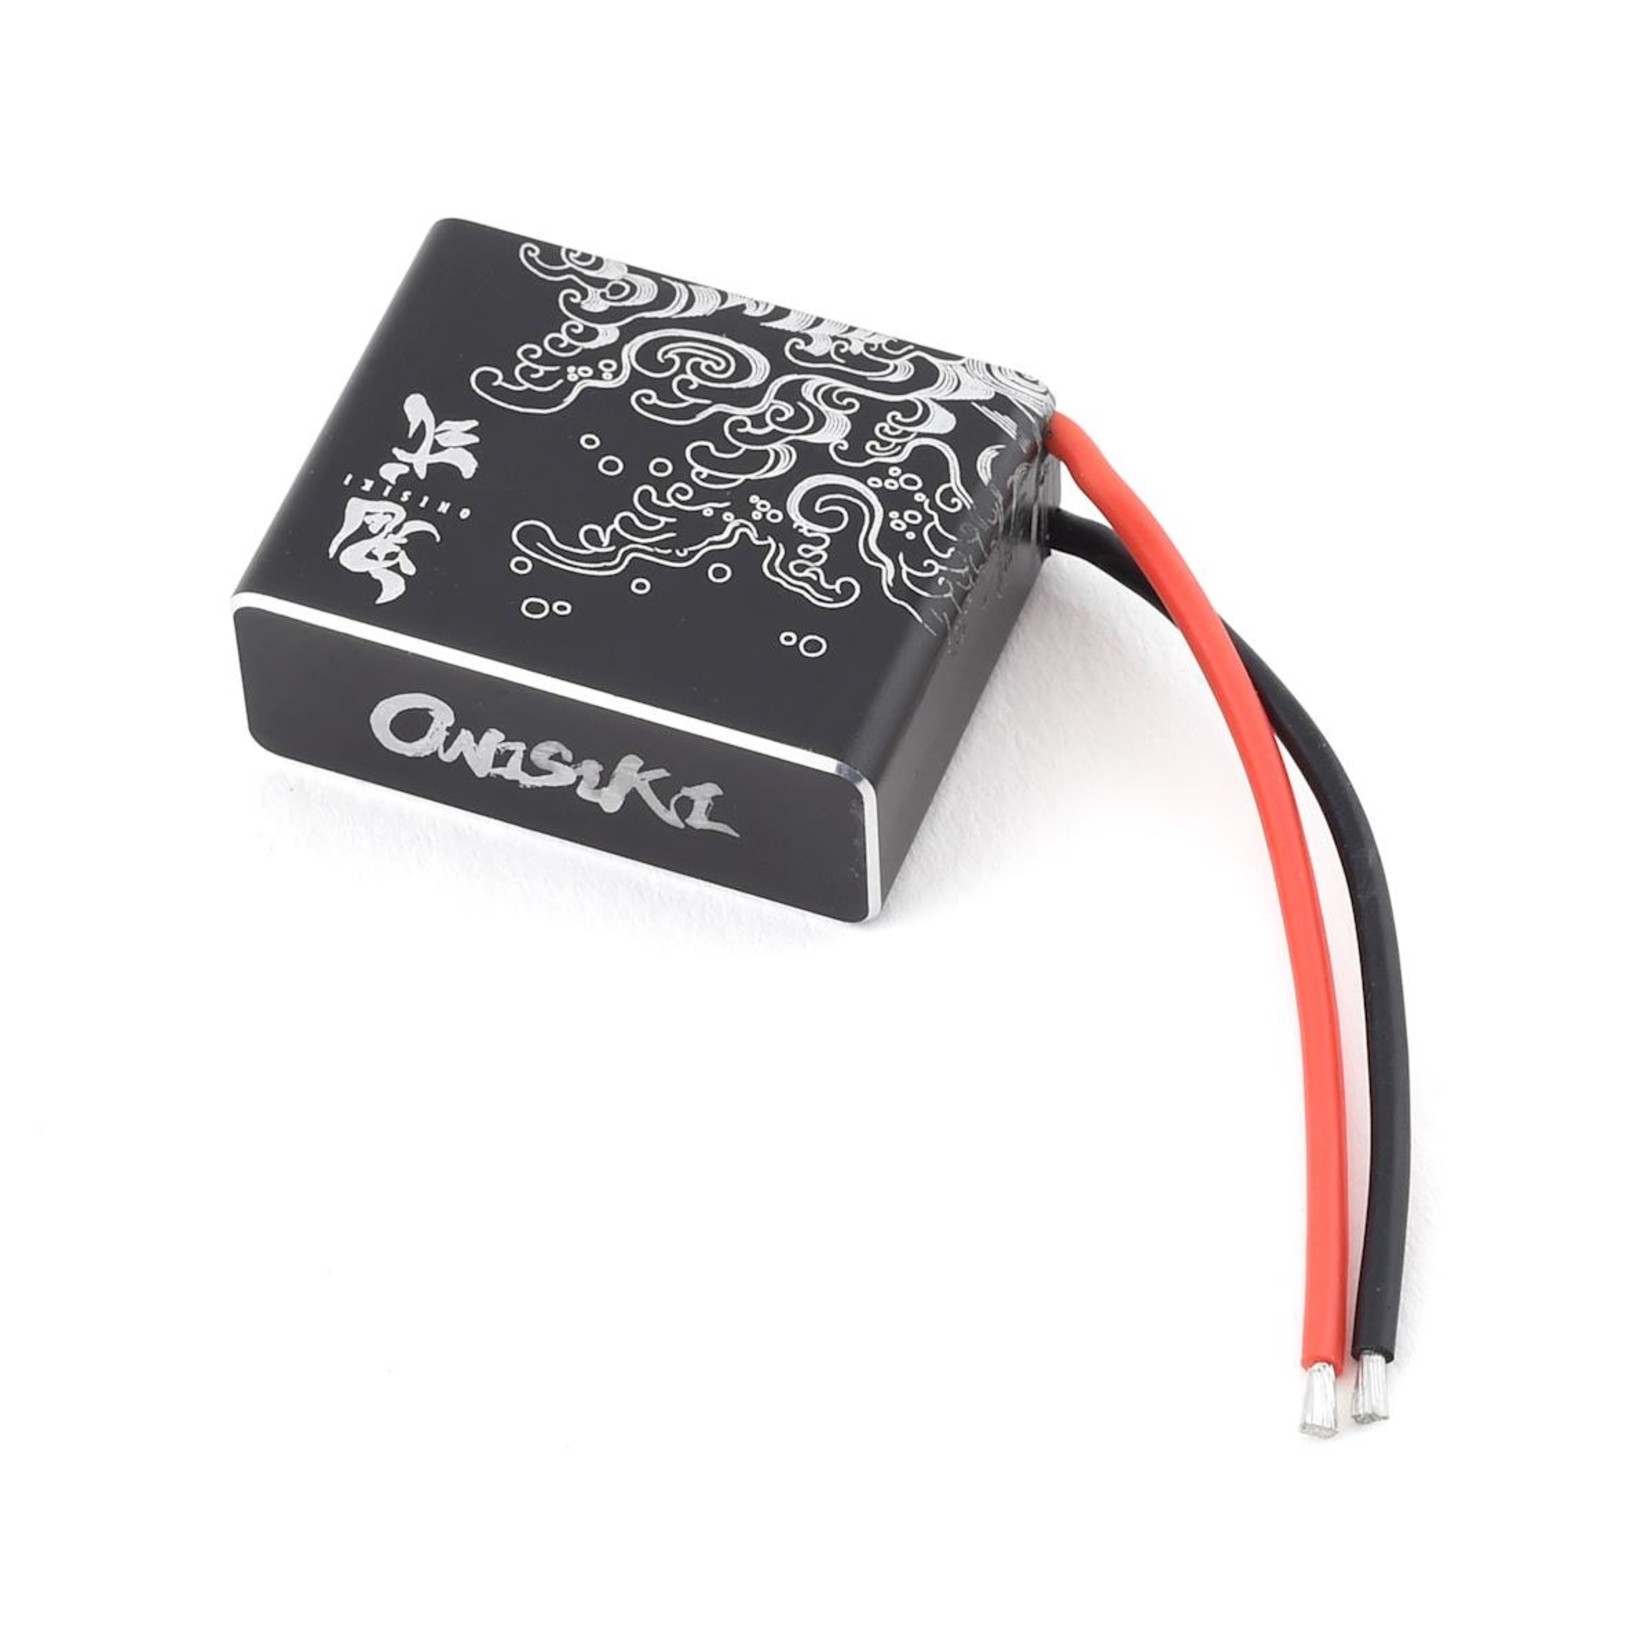 Onisiki ONI4603 Onisiki Aluminum Case Hyper Booster Capacitor